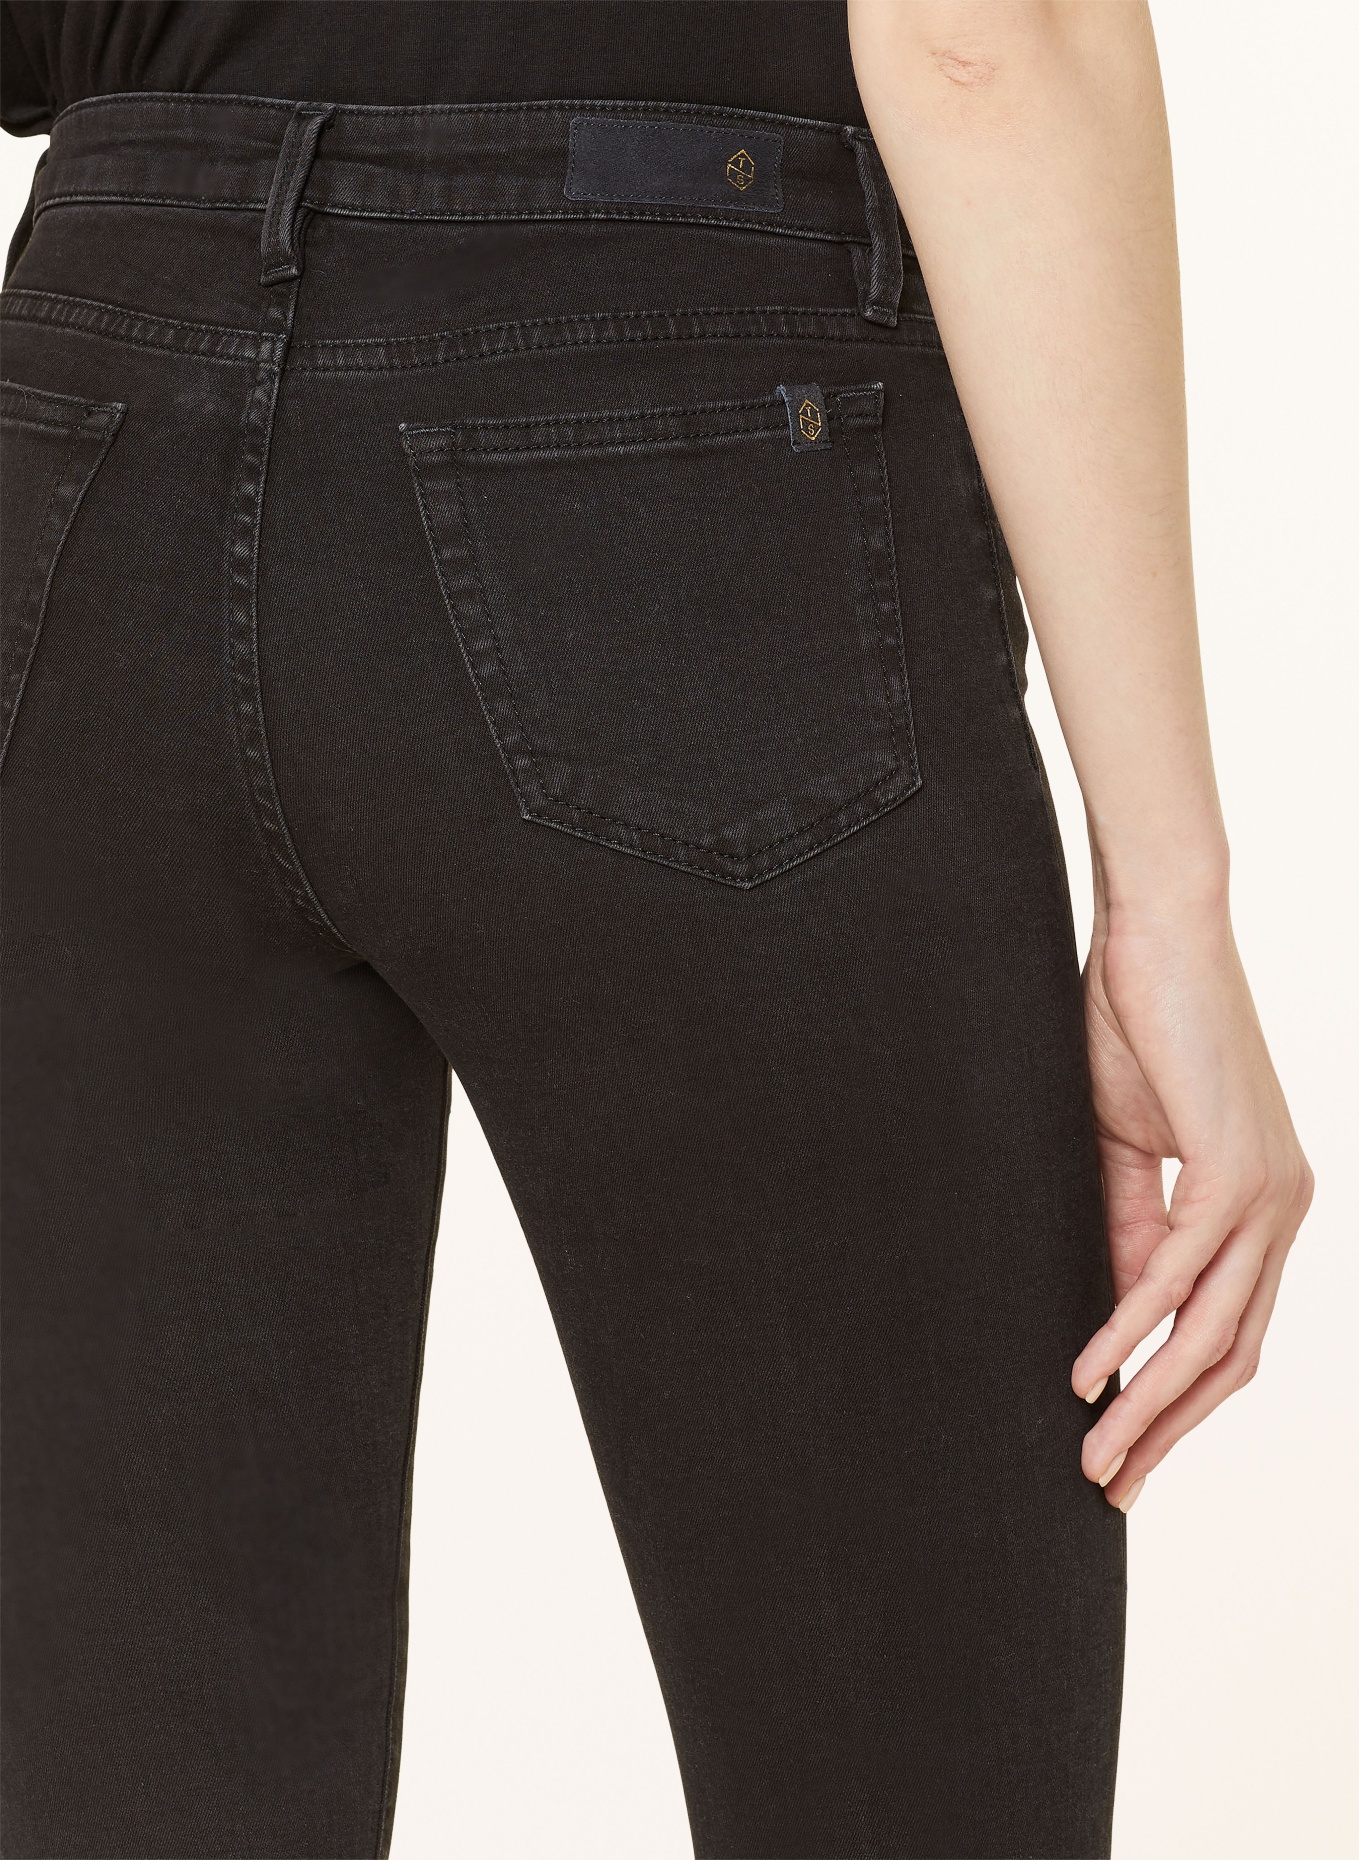 THE.NIM STANDARD Skinny Jeans HOLLY, Farbe: W206-BLK Black (Bild 5)